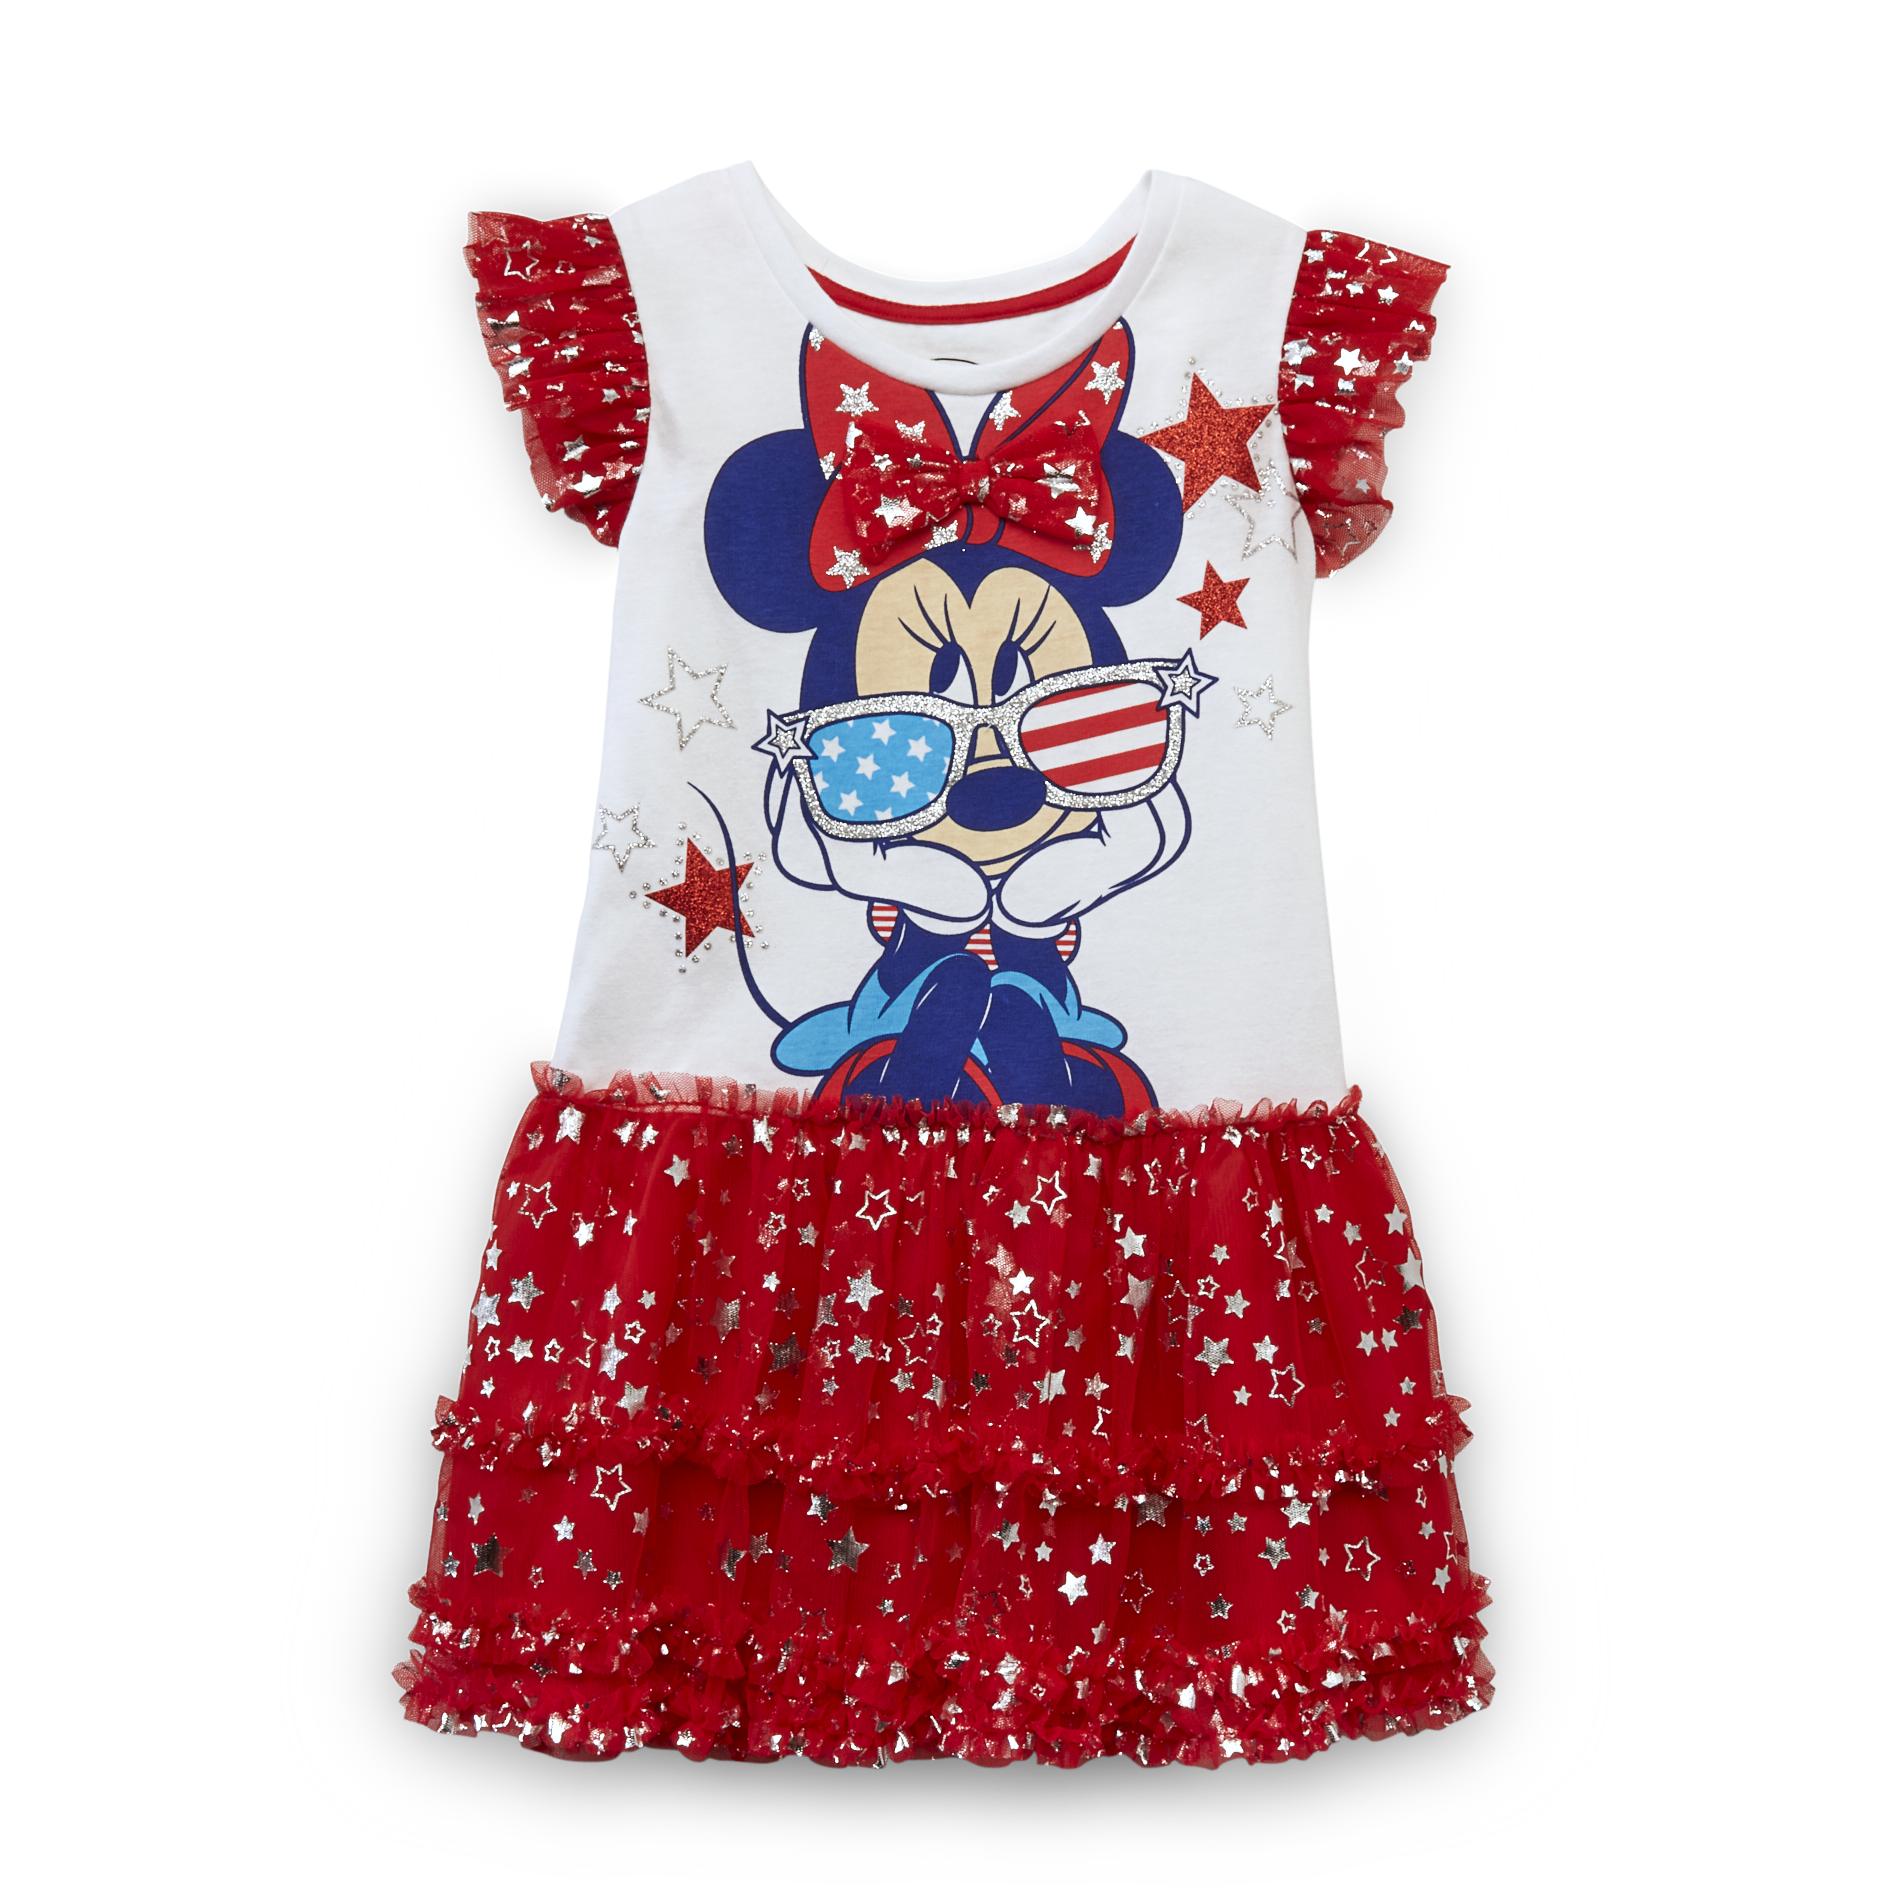 Disney Infant & Toddler Girl's Tutu Dress - All-American Minnie